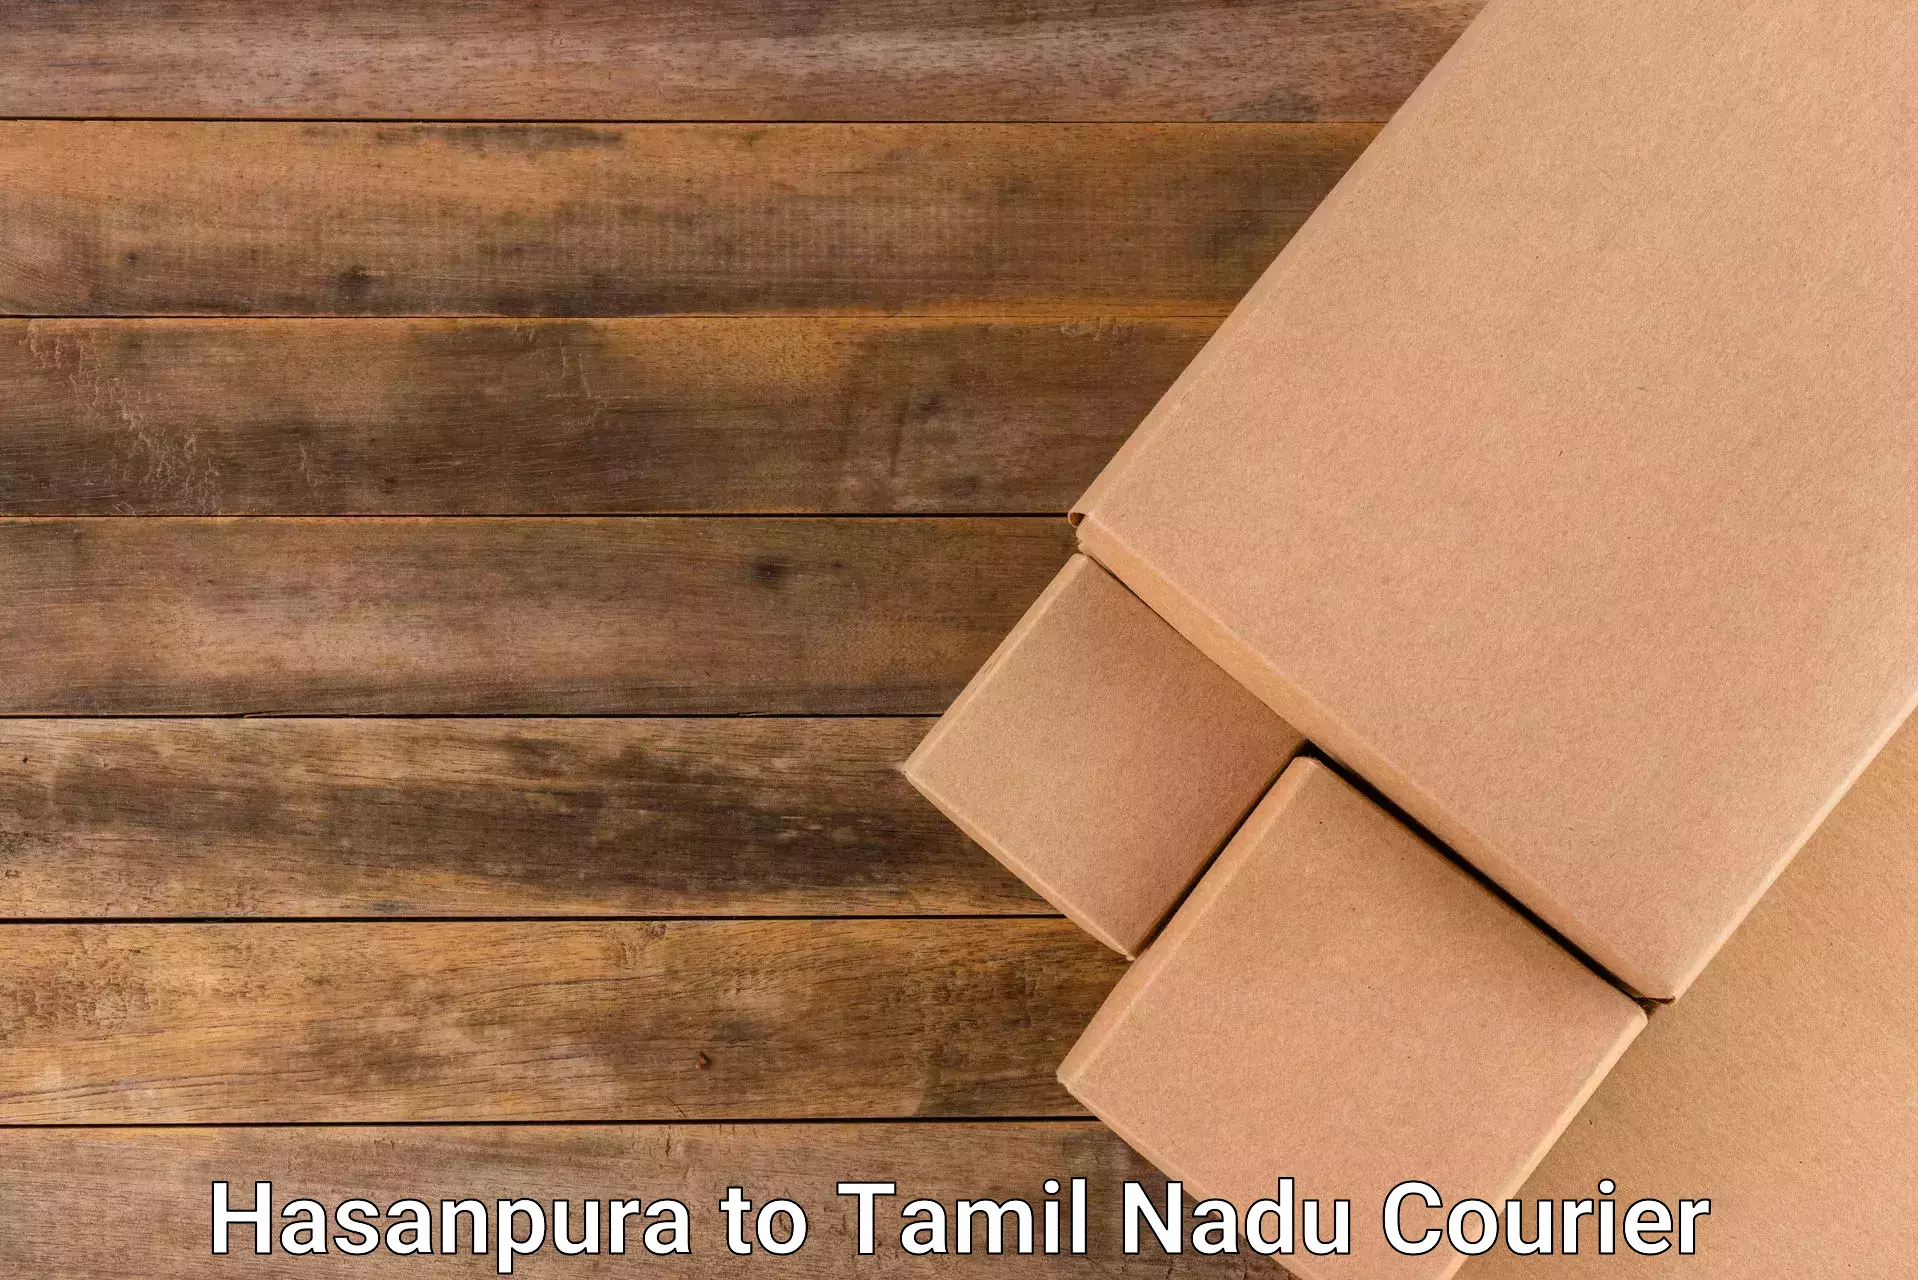 Delivery service partnership Hasanpura to Tamil Nadu